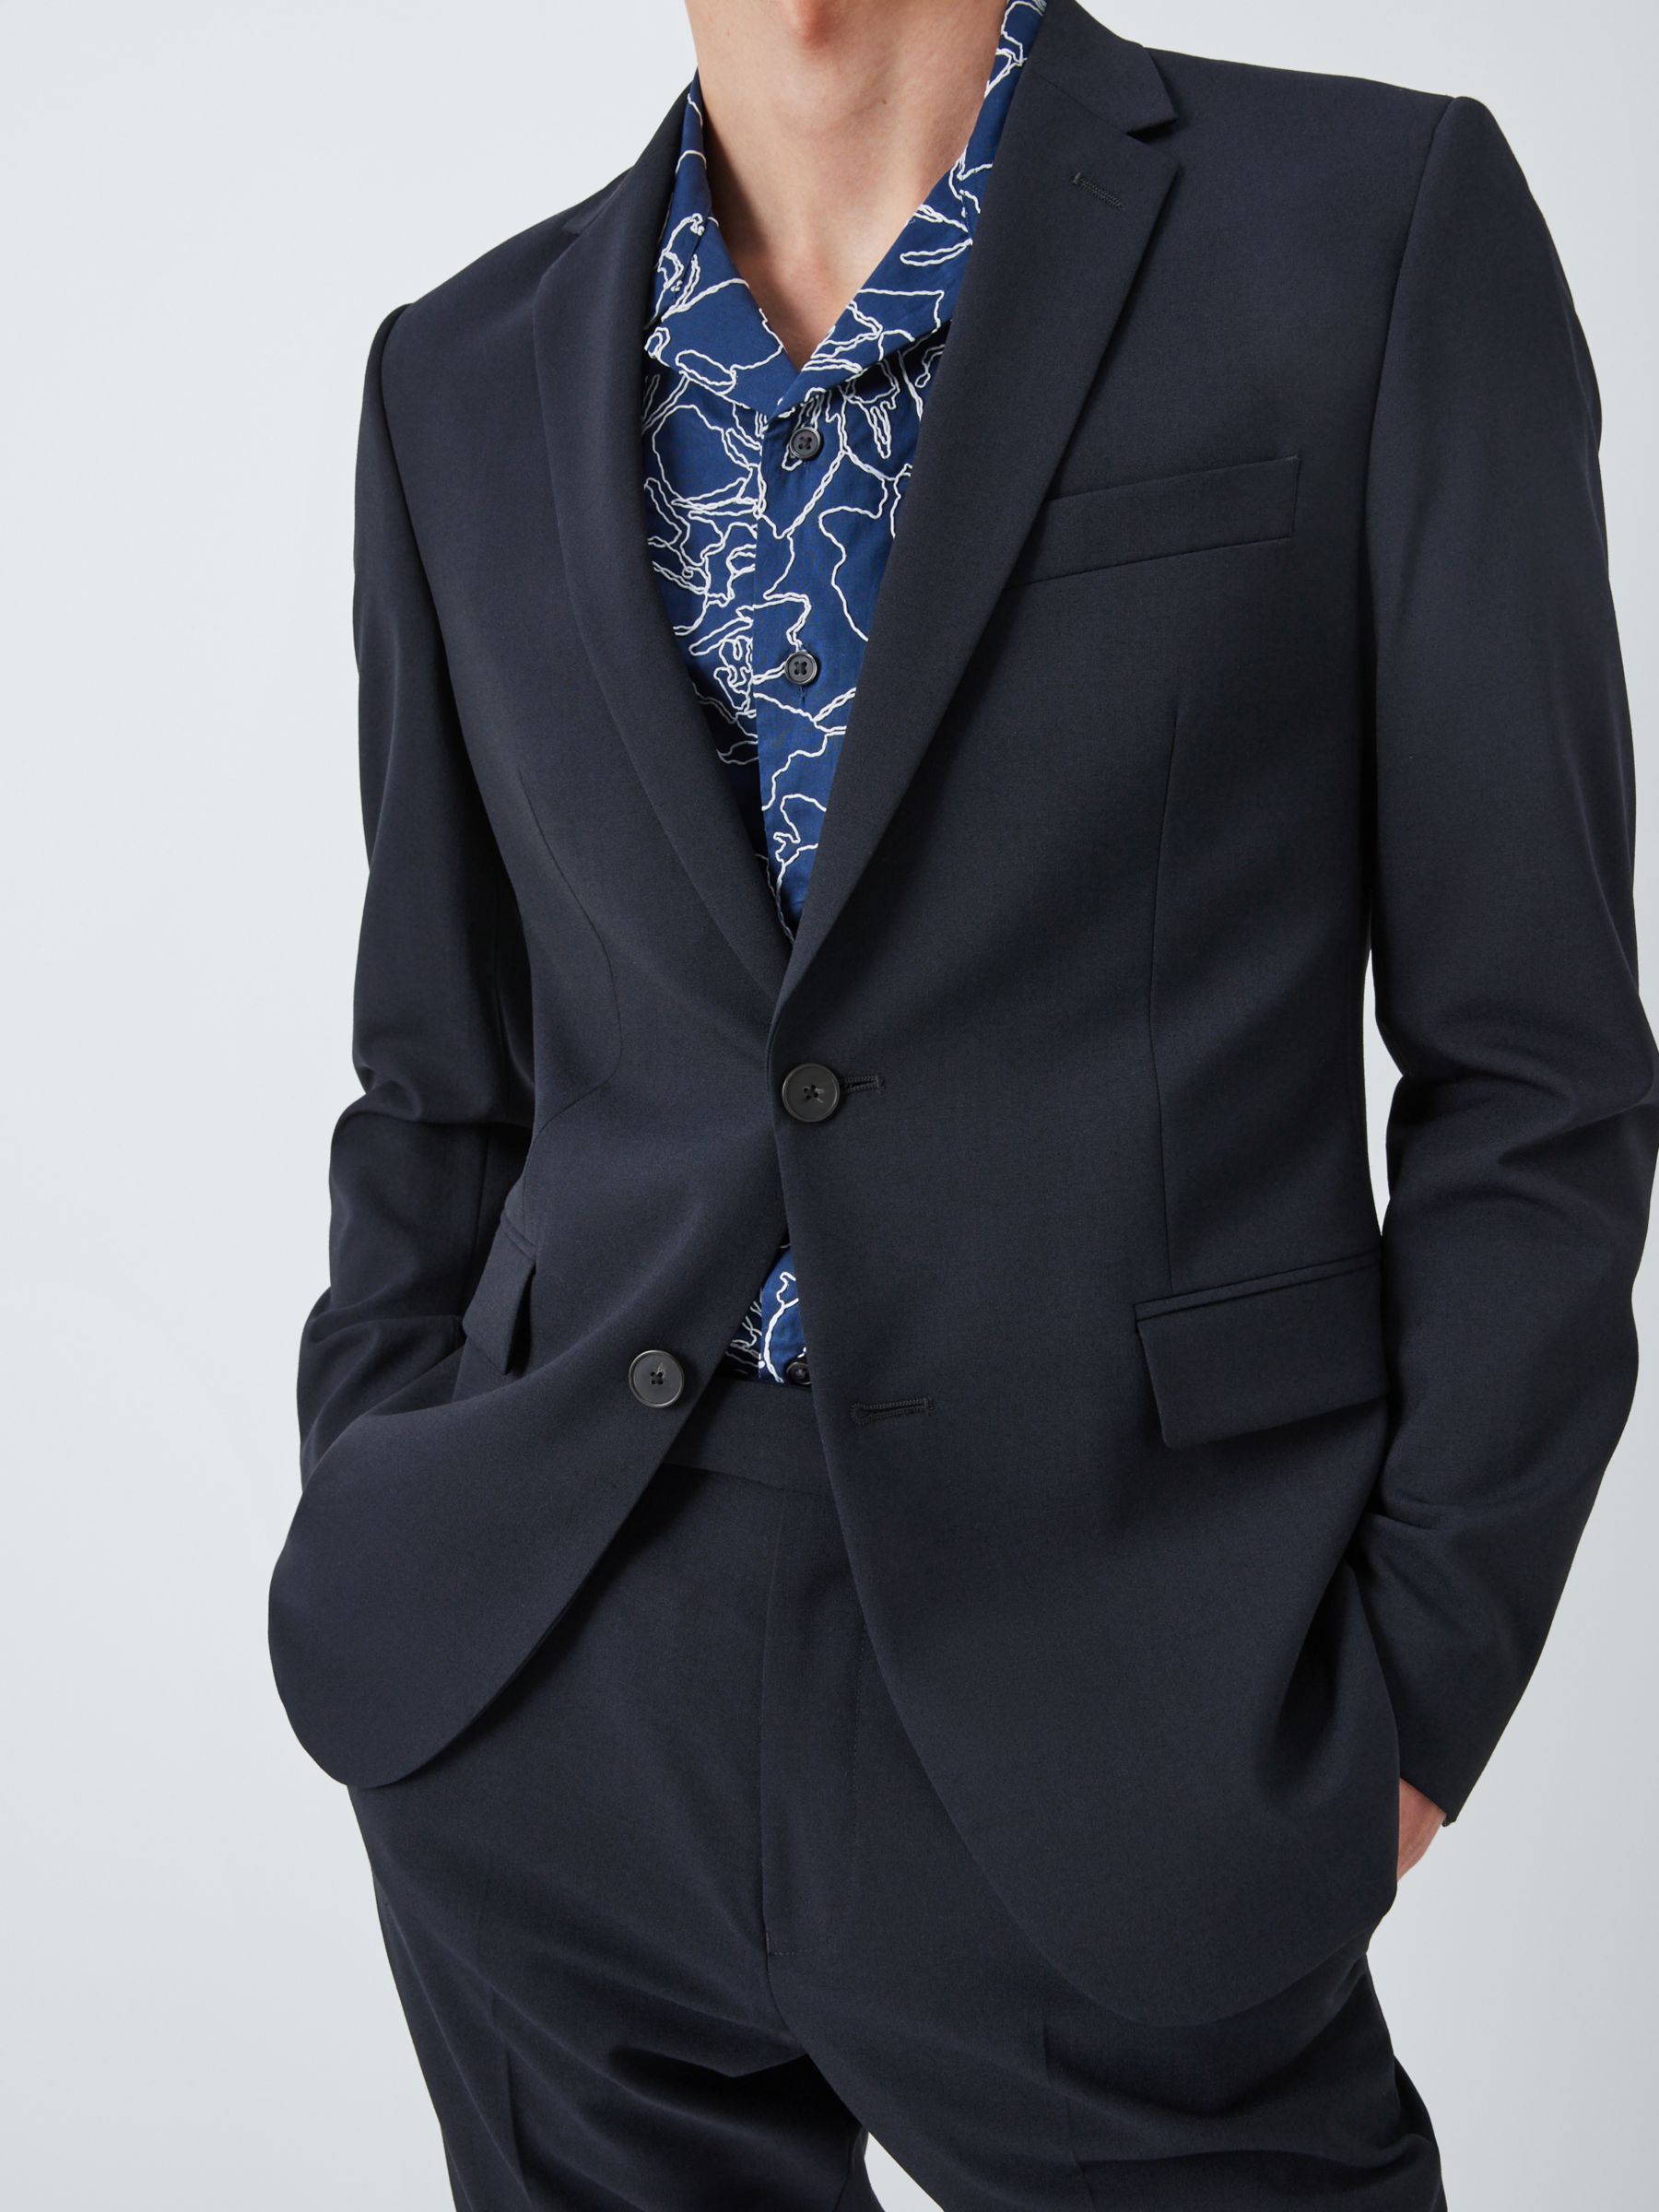 Buy Kin Wool Blend Slim Fit Notch Lapel Suit Jacket, Navy Online at johnlewis.com